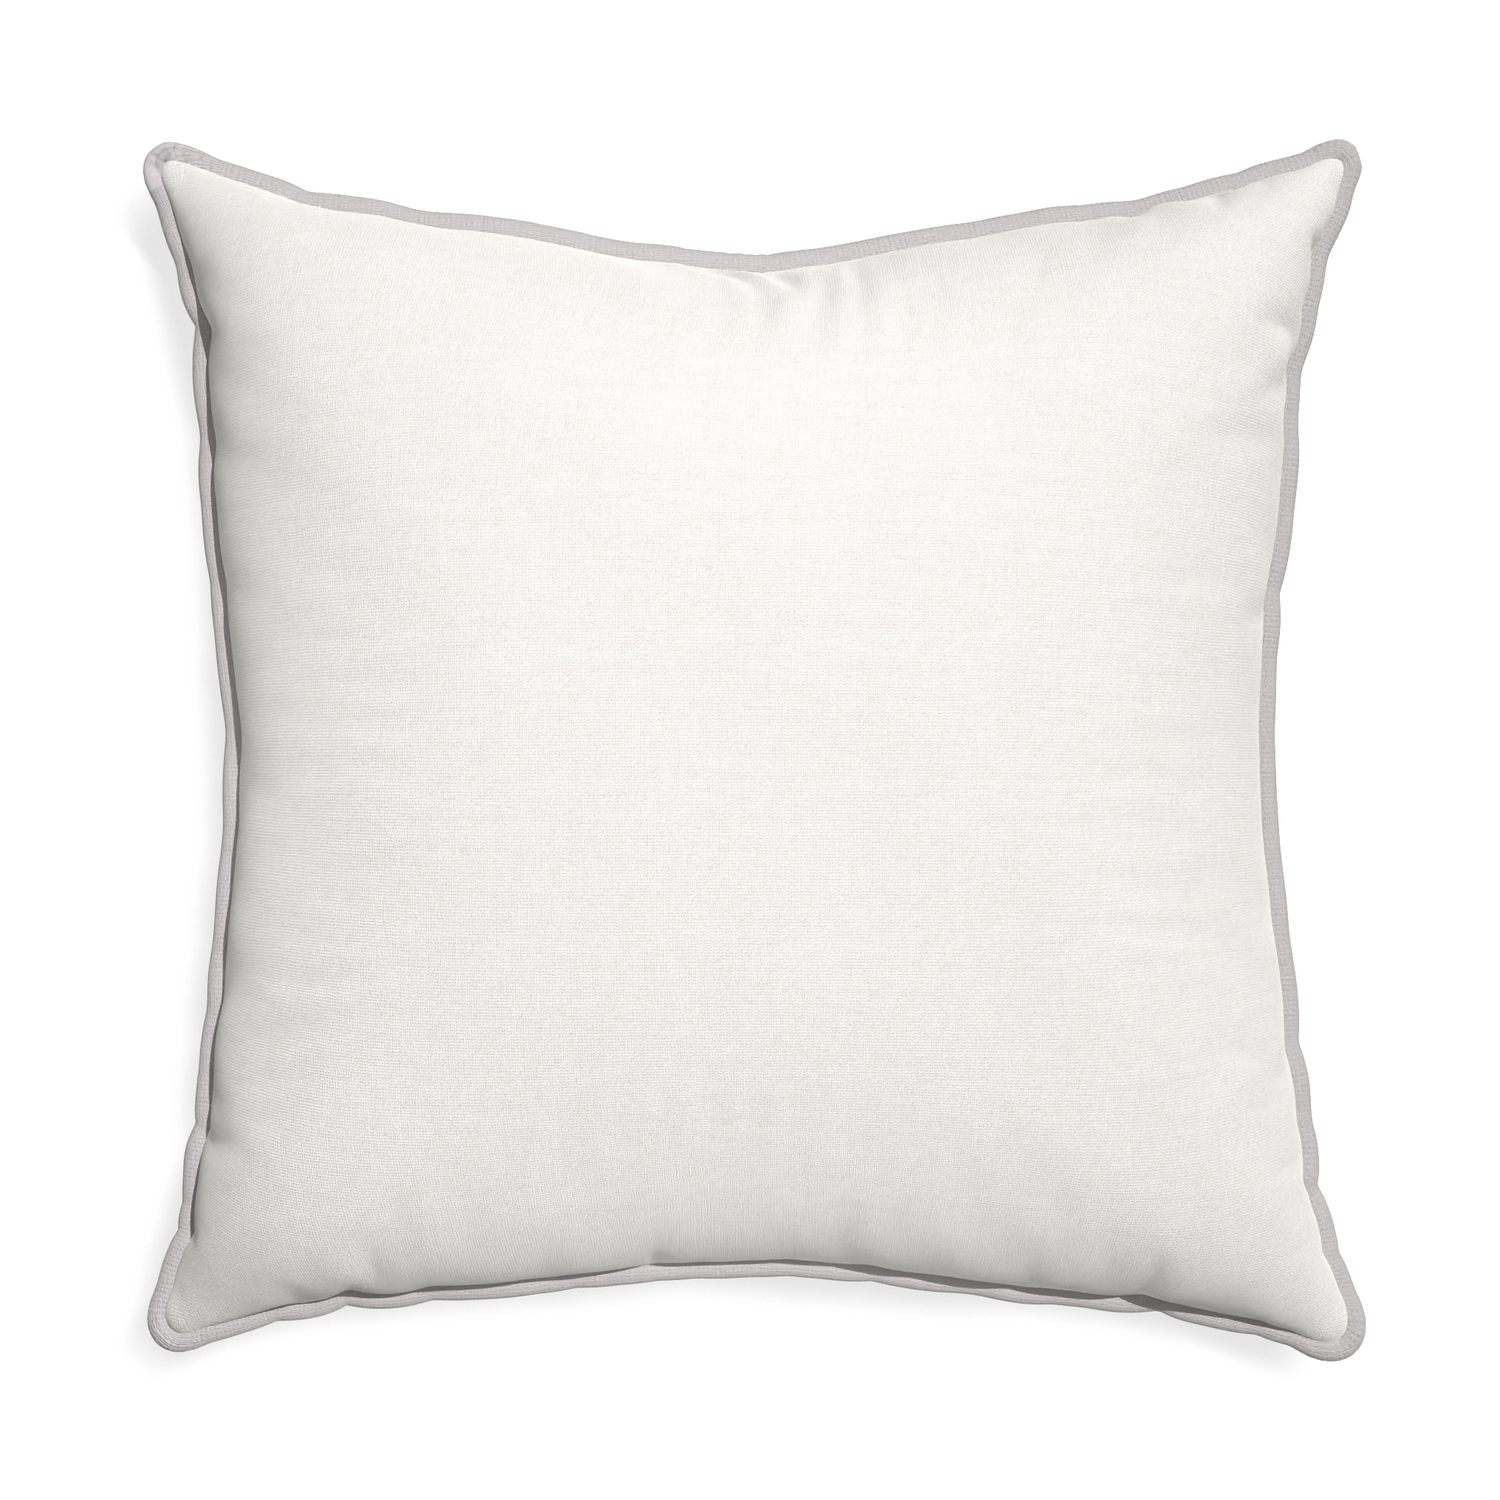 Euro-sham flour custom pillow with pebble piping on white background